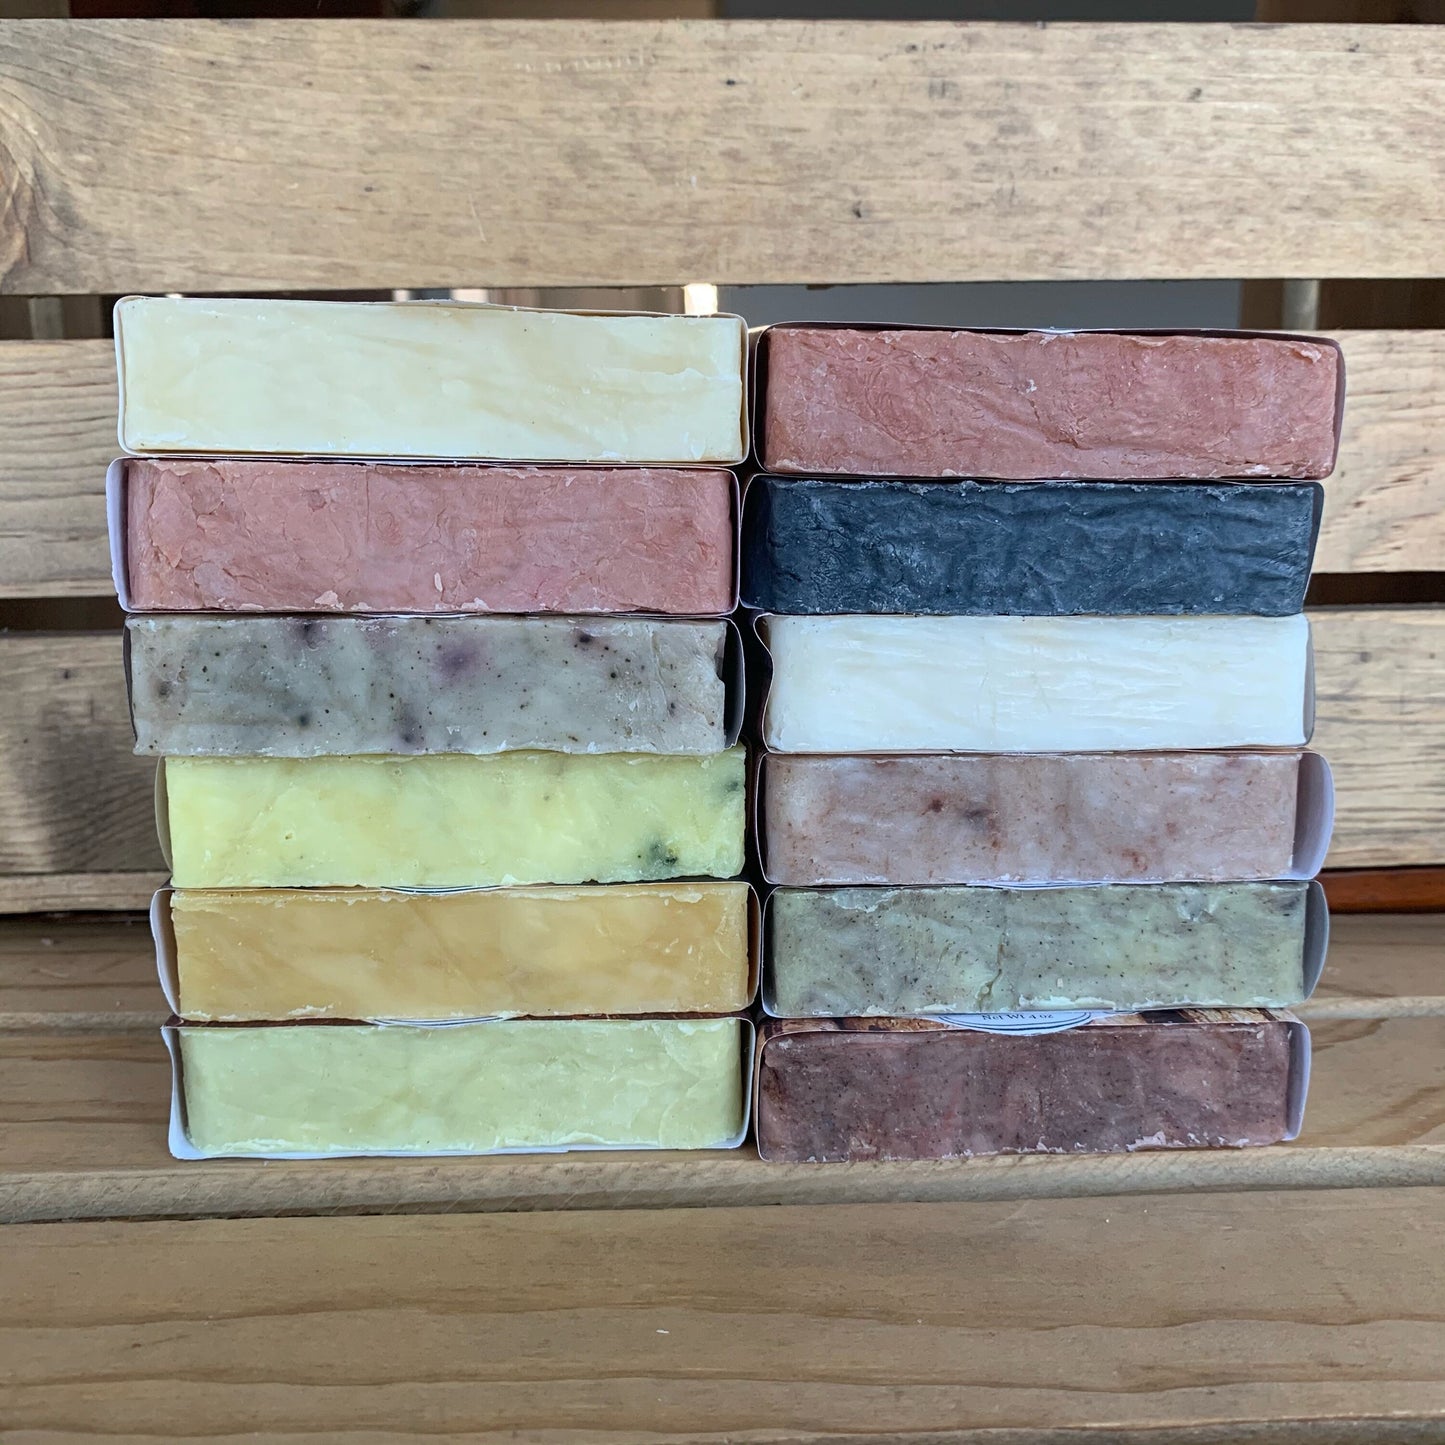 12 Full Size Bars of Soap- Bulk Soap- free shipping- Bar Soap- Natural Bar Soap - Palm Free Soap